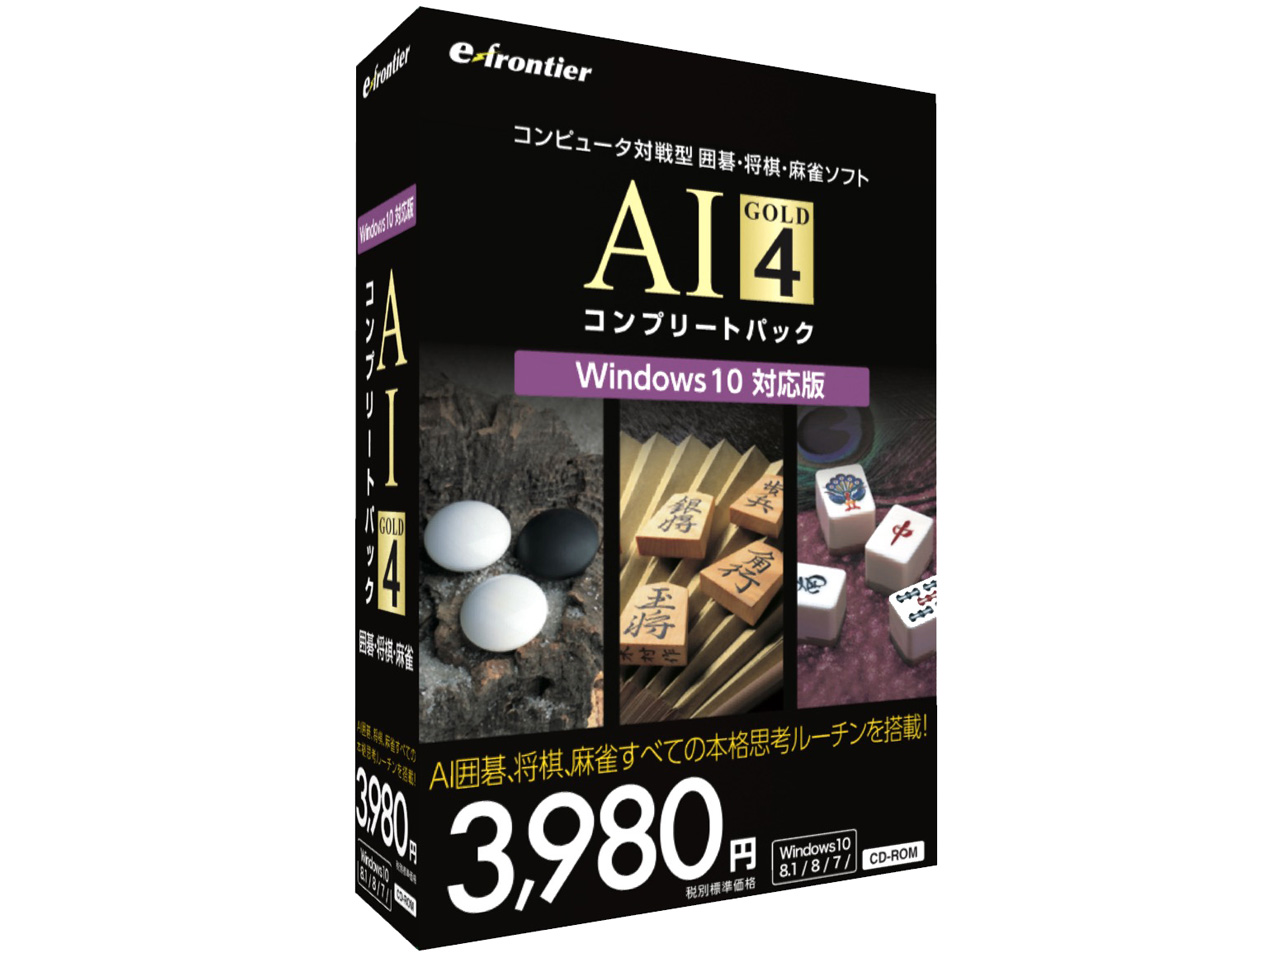 Ai Gold 4 コンプリートパック Windows 10対応版 の製品画像 価格 Com